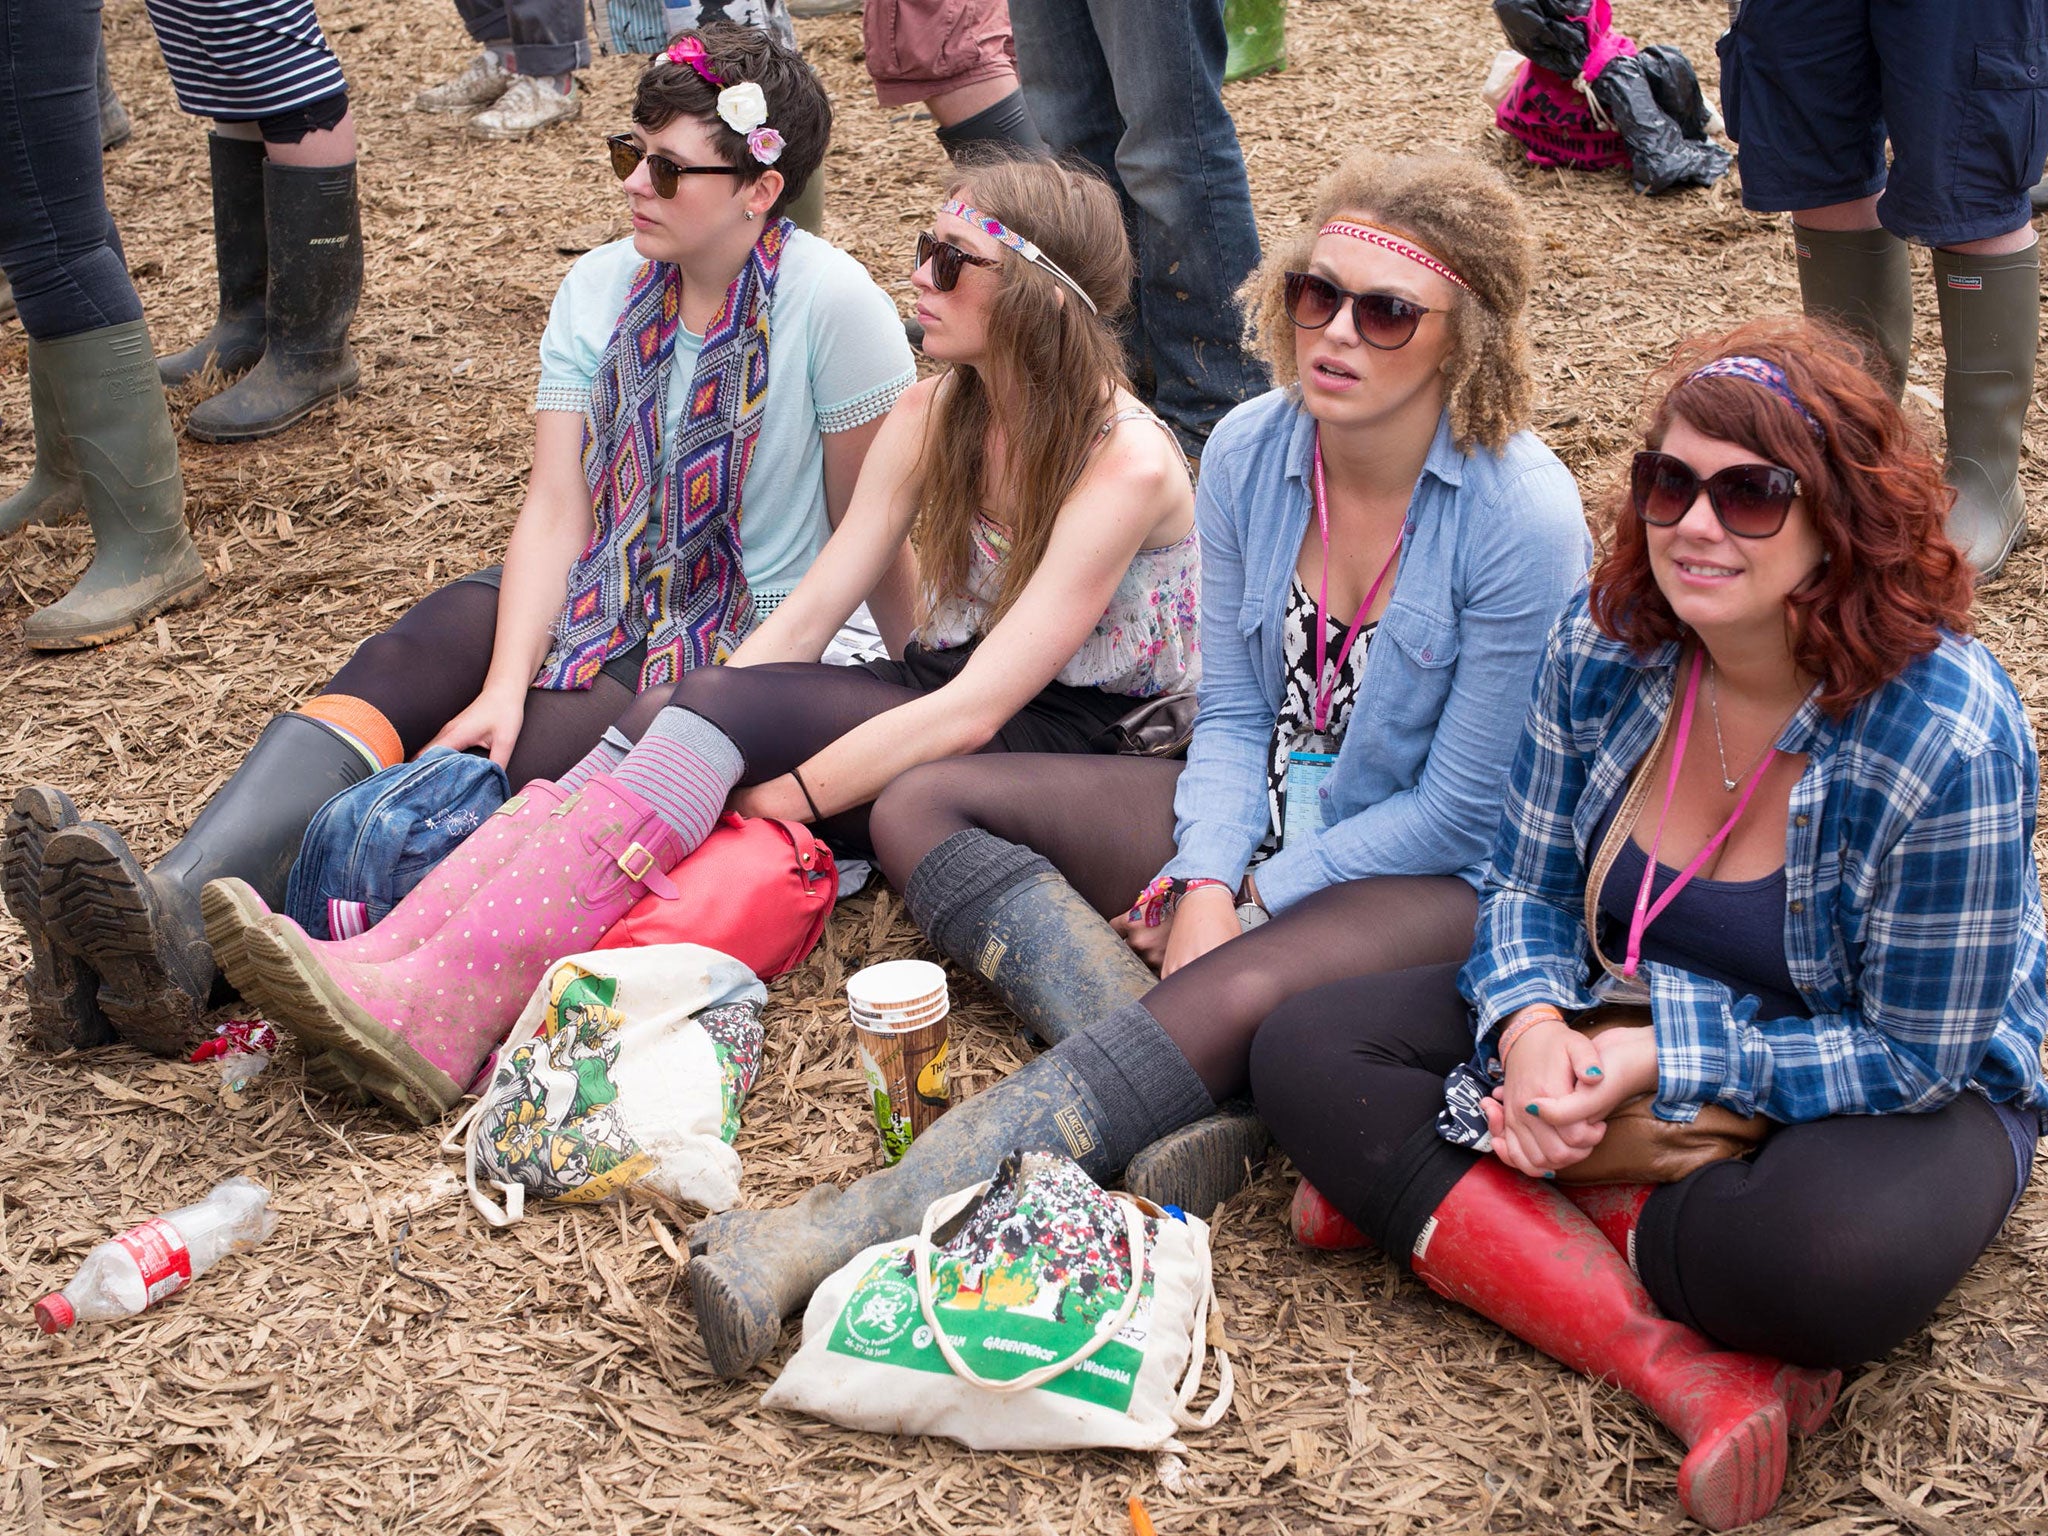 Festival goers enjoy the atmosphere at the Glastonbury Festival at Worthy Farm, Pilton